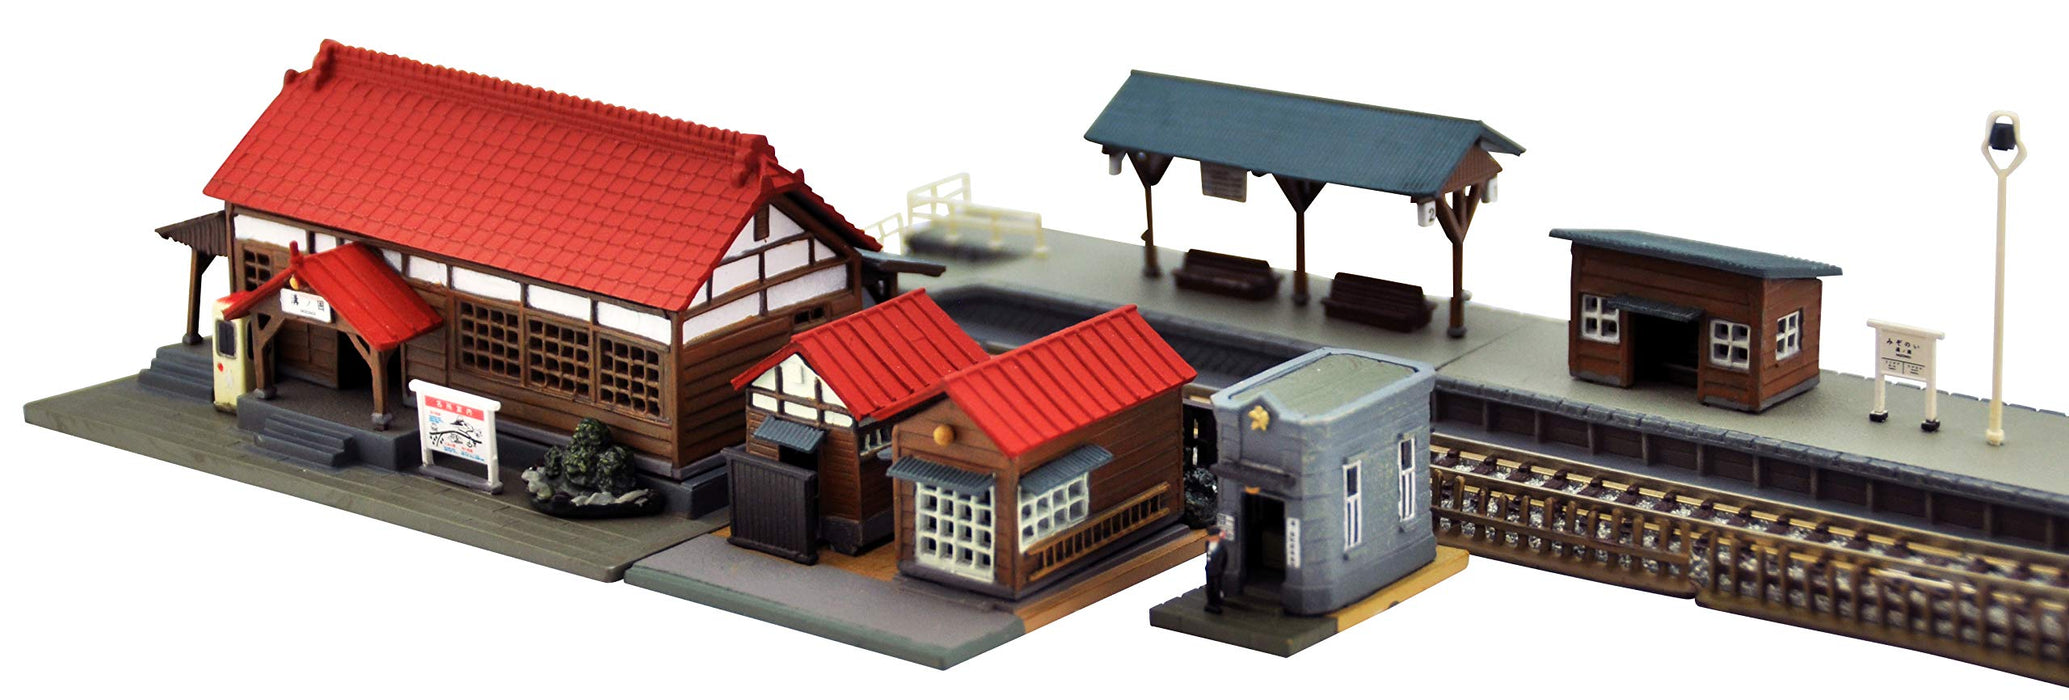 Tomytec Building Collection Kenkore 073-4 Station Set 4-Piece Diorama Supplies 311805